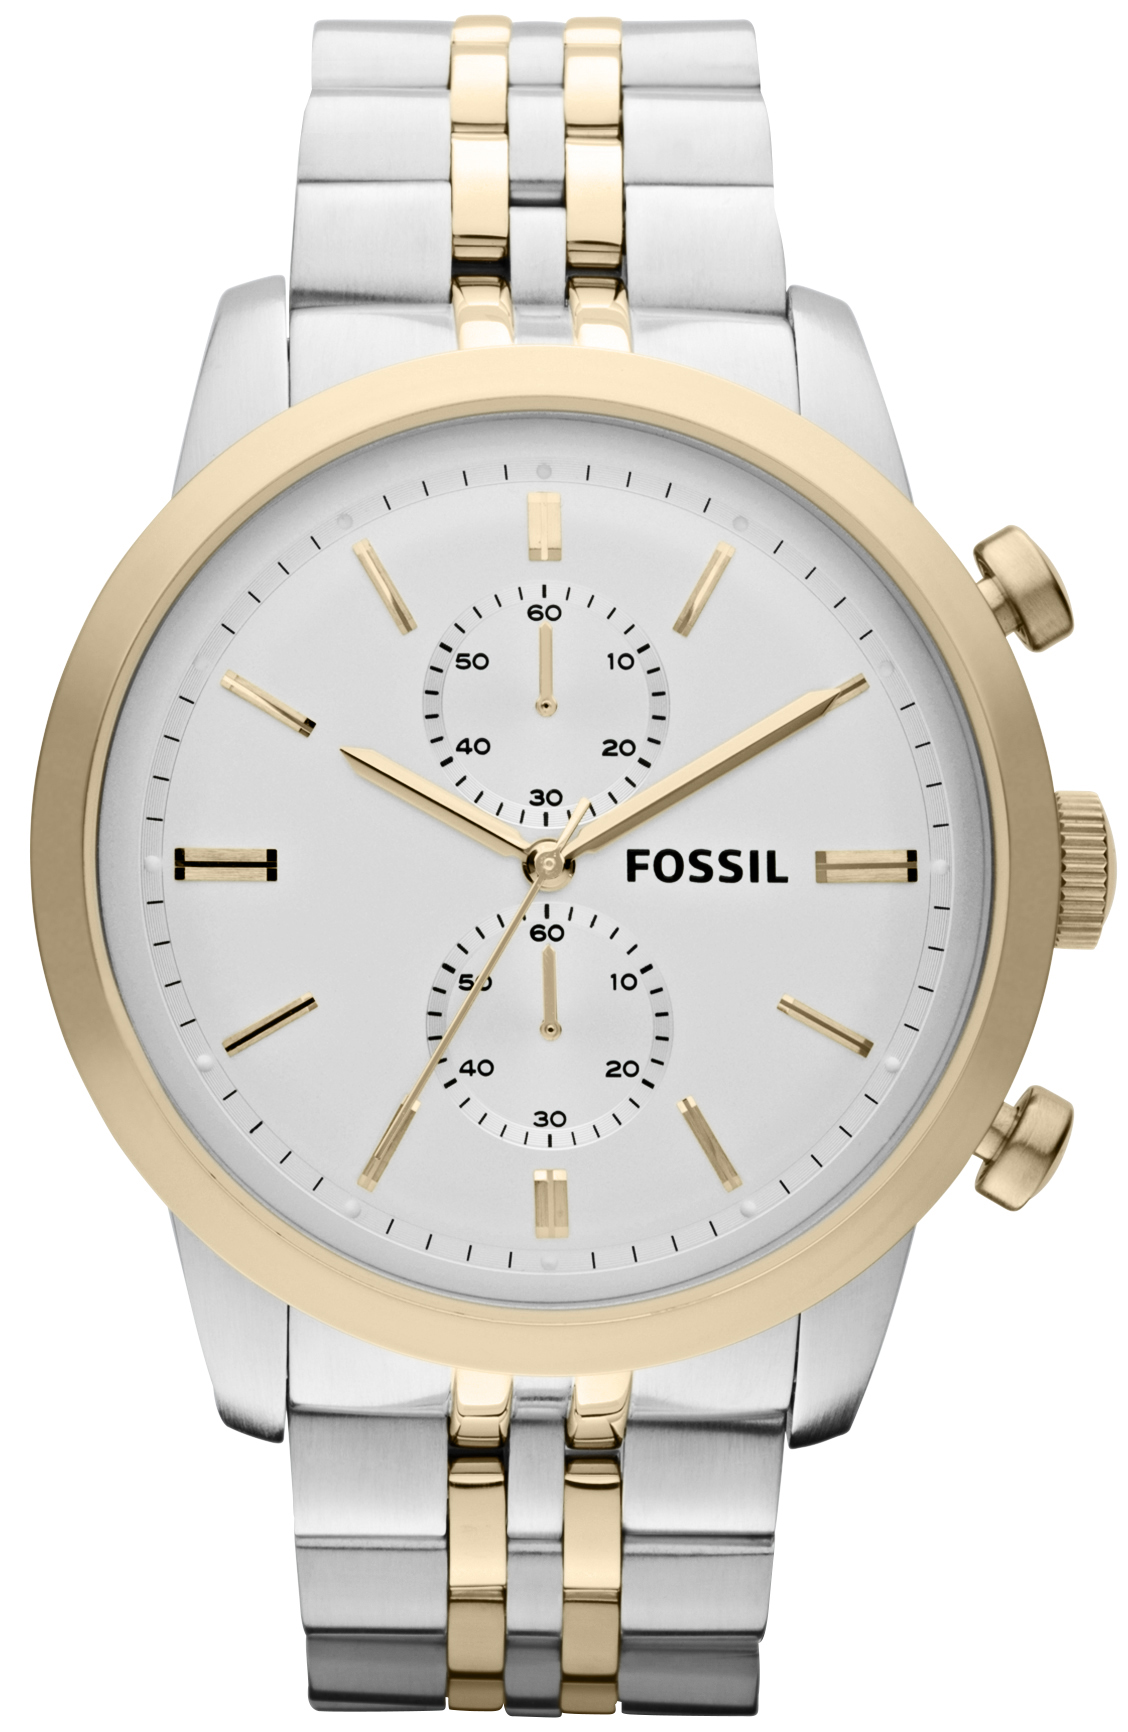 Fossil FS4785 - Watch • Watchard.com